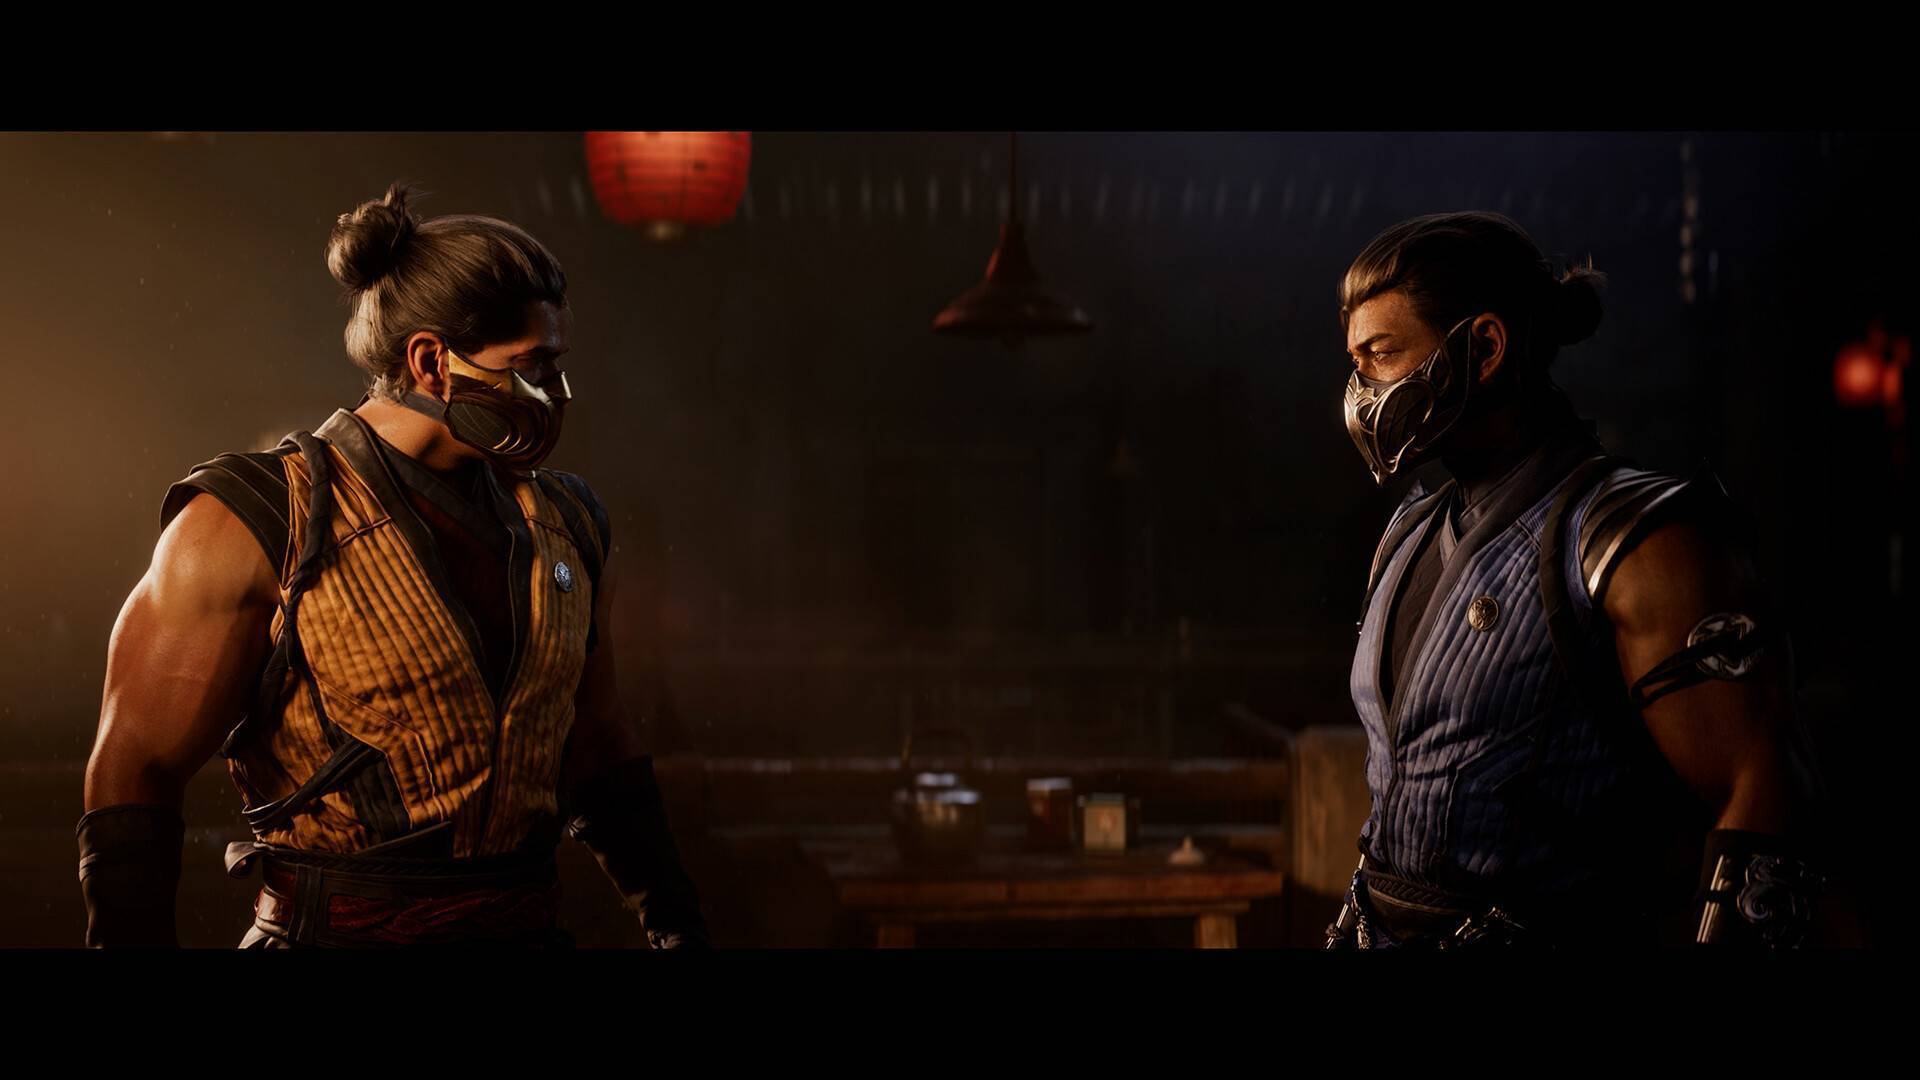 Download Xbox Mortal Kombat X Kombat Pack 1 Xbox One Digital Code